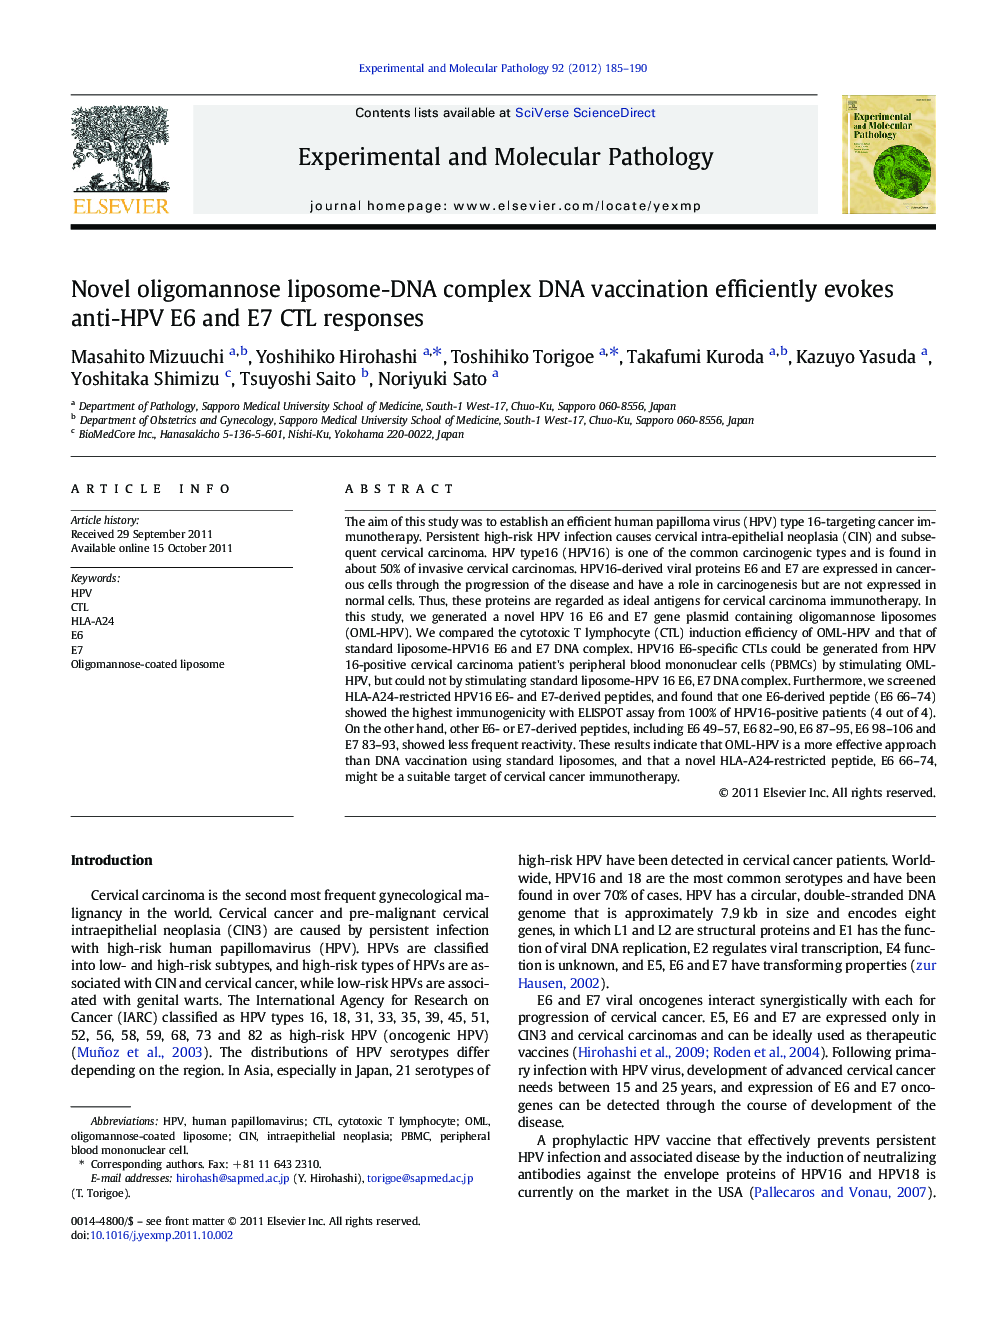 Novel oligomannose liposome-DNA complex DNA vaccination efficiently evokes anti-HPV E6 and E7 CTL responses